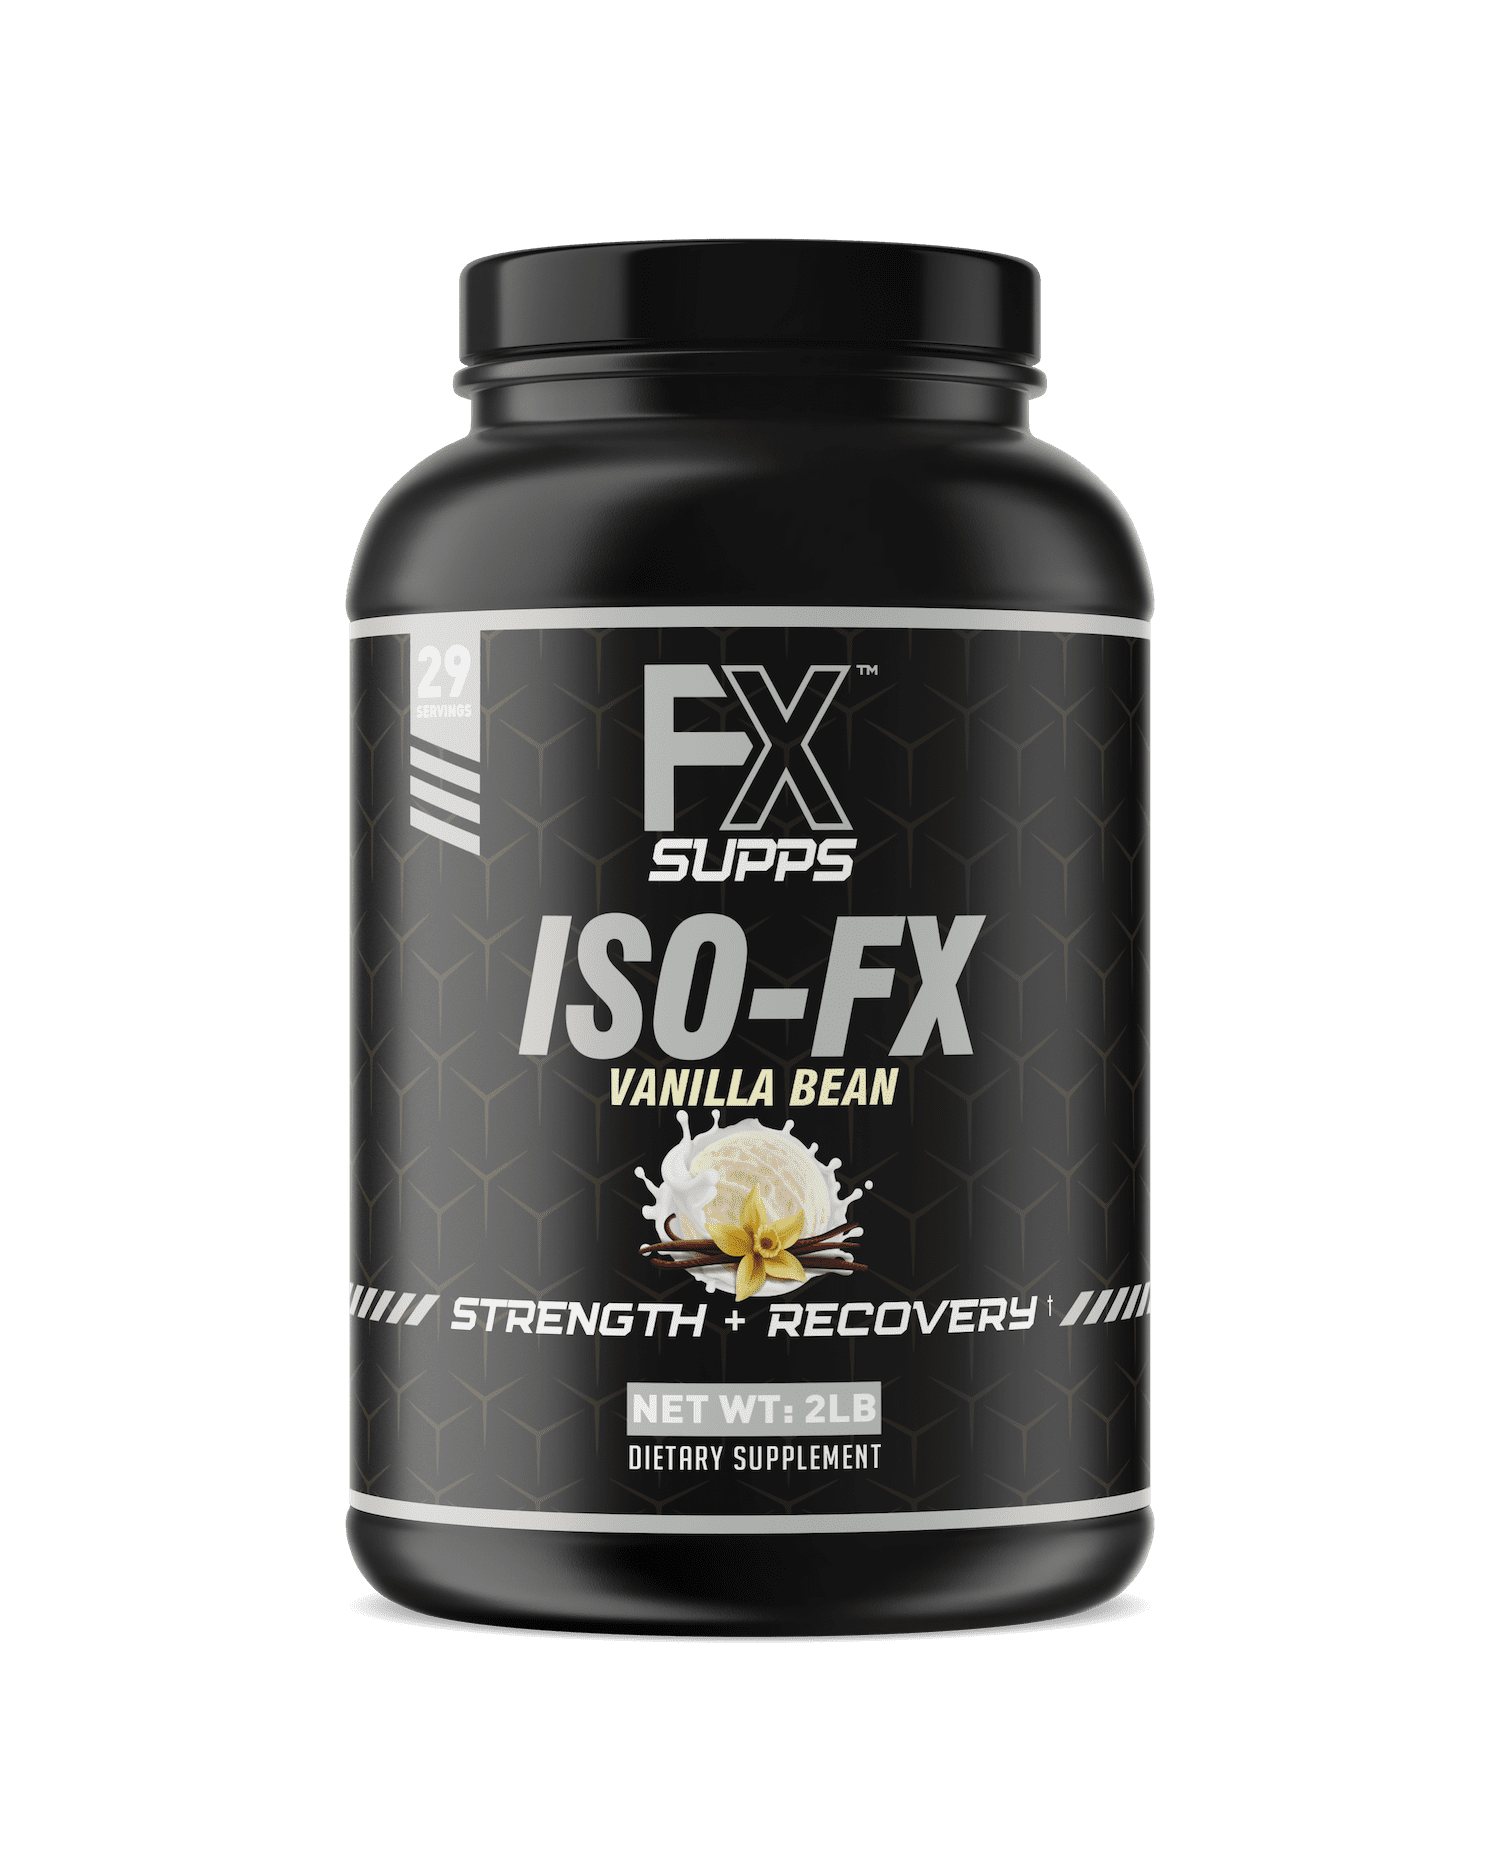 FX Supps ISO-FX Isolate Whey Protein Powder, 25g Protein, Vanilla Bean, 2.0 lbs